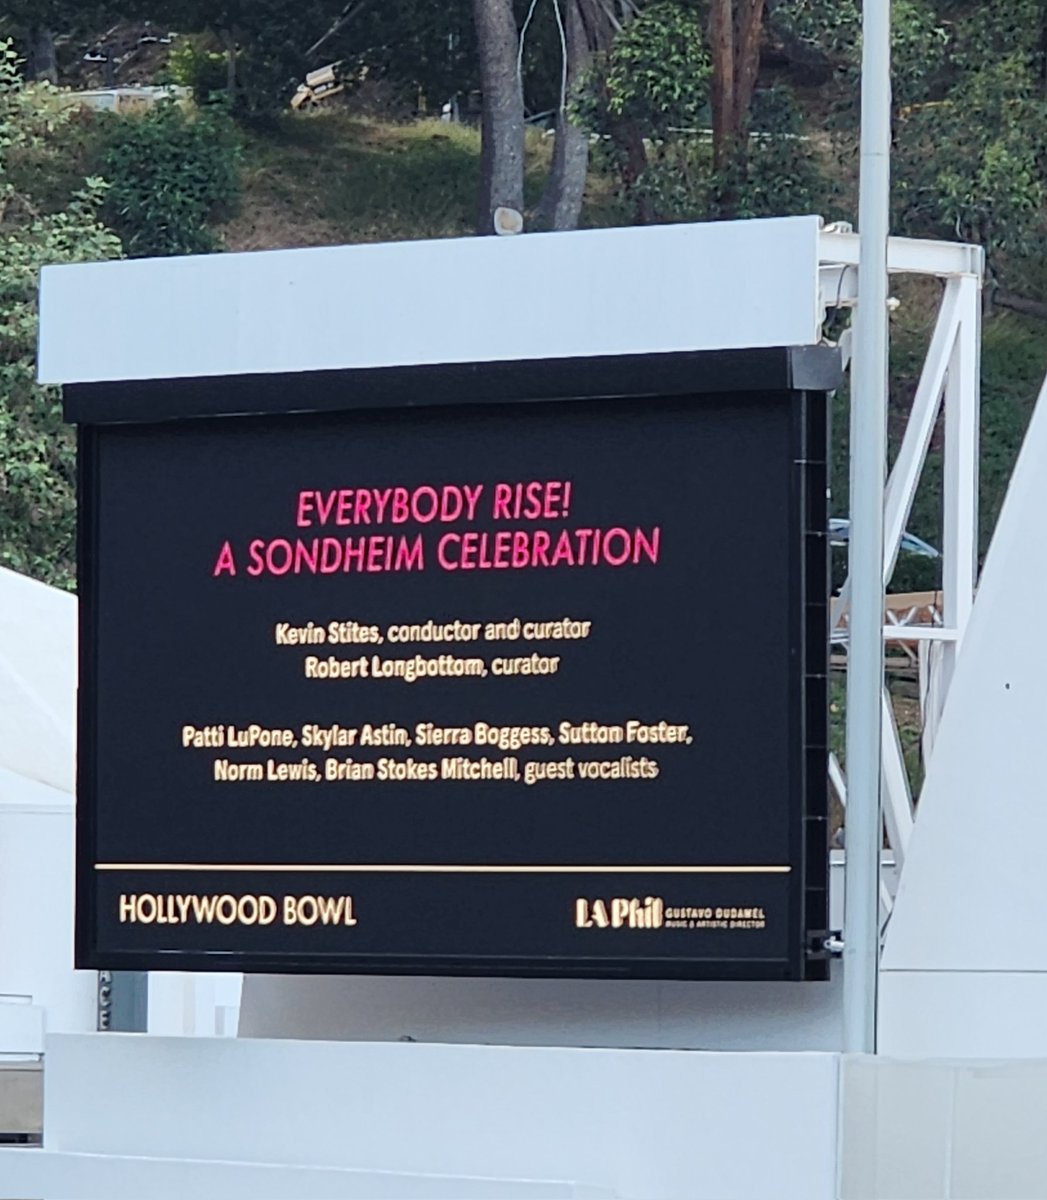 Everybody Rise, a Sondheim Celebration  tonight @HollywoodBowl 
#SondheimForever